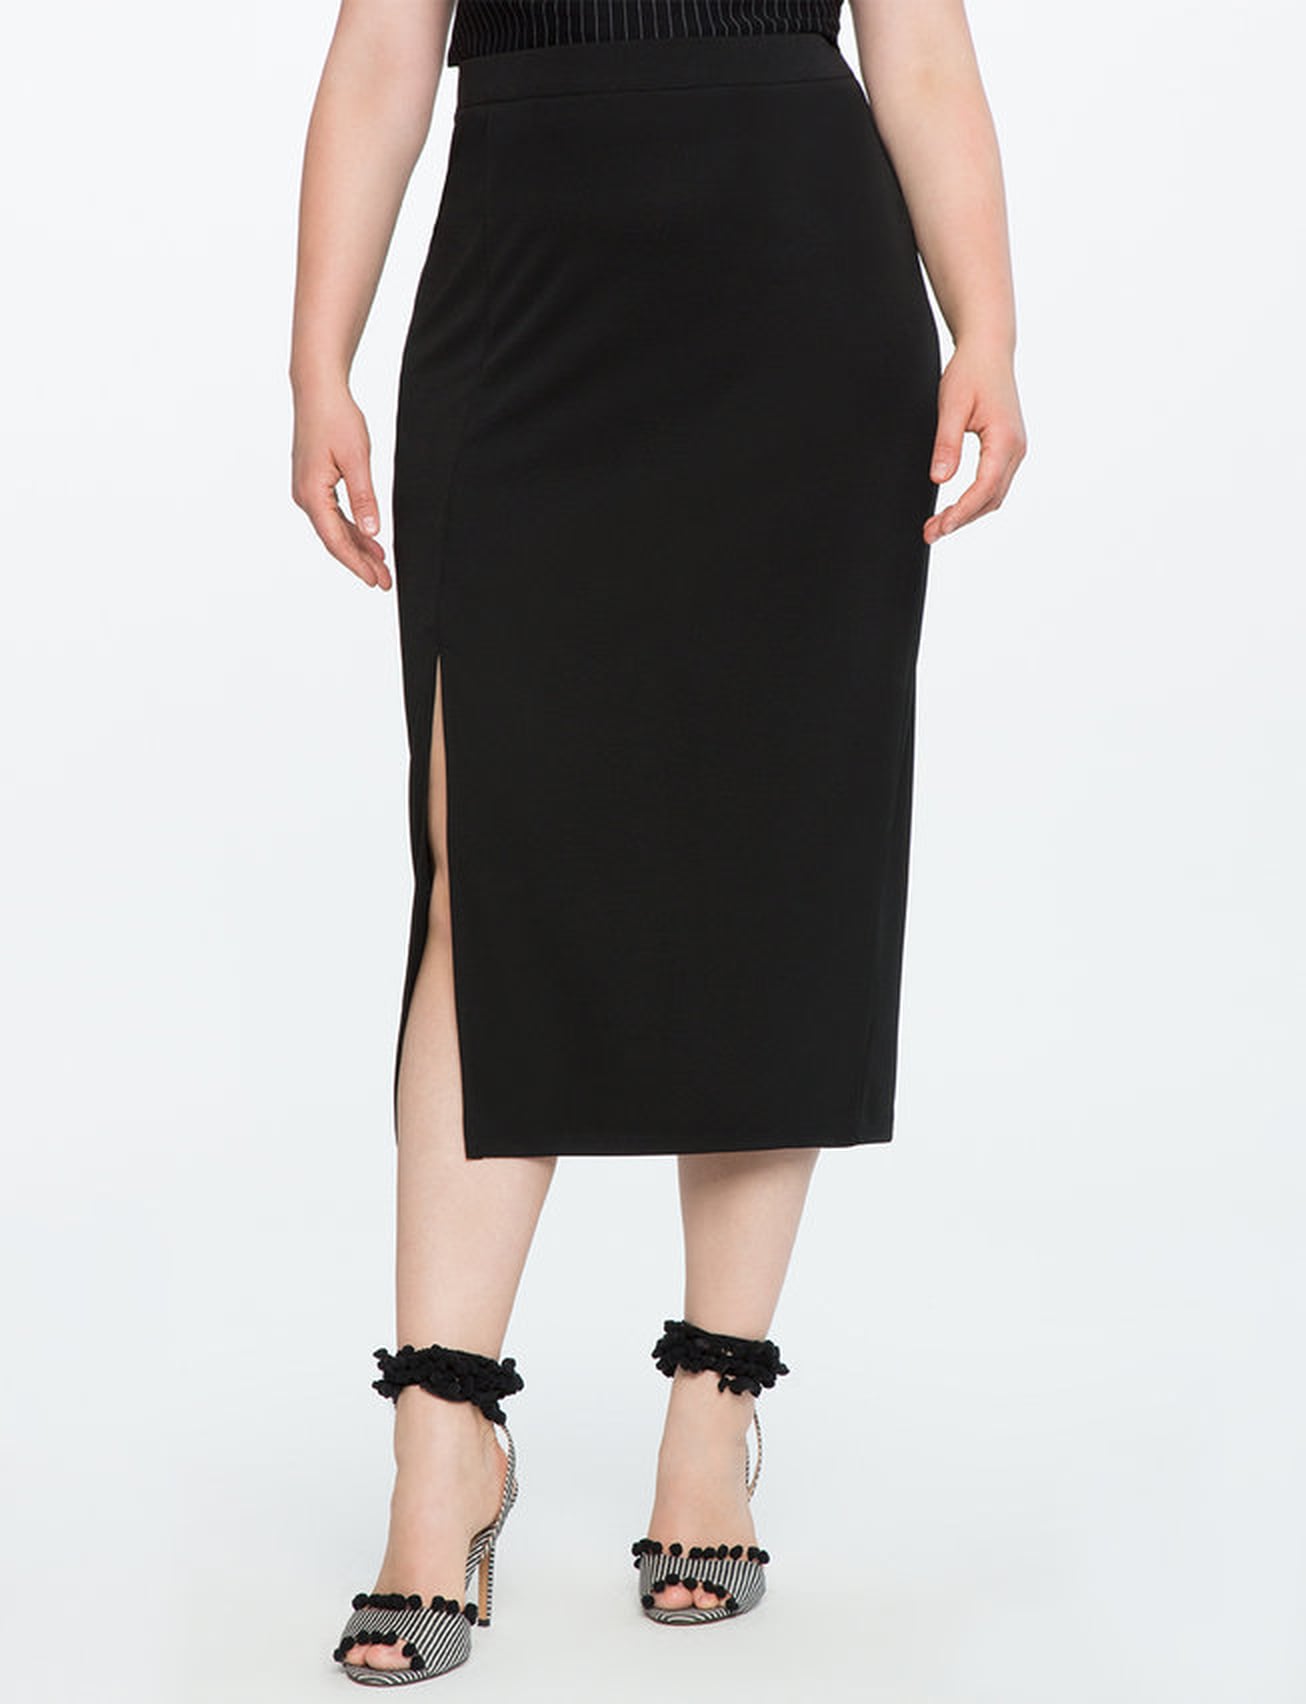 Angelina Jolie Black Pencil Skirt and Blouse | POPSUGAR Fashion